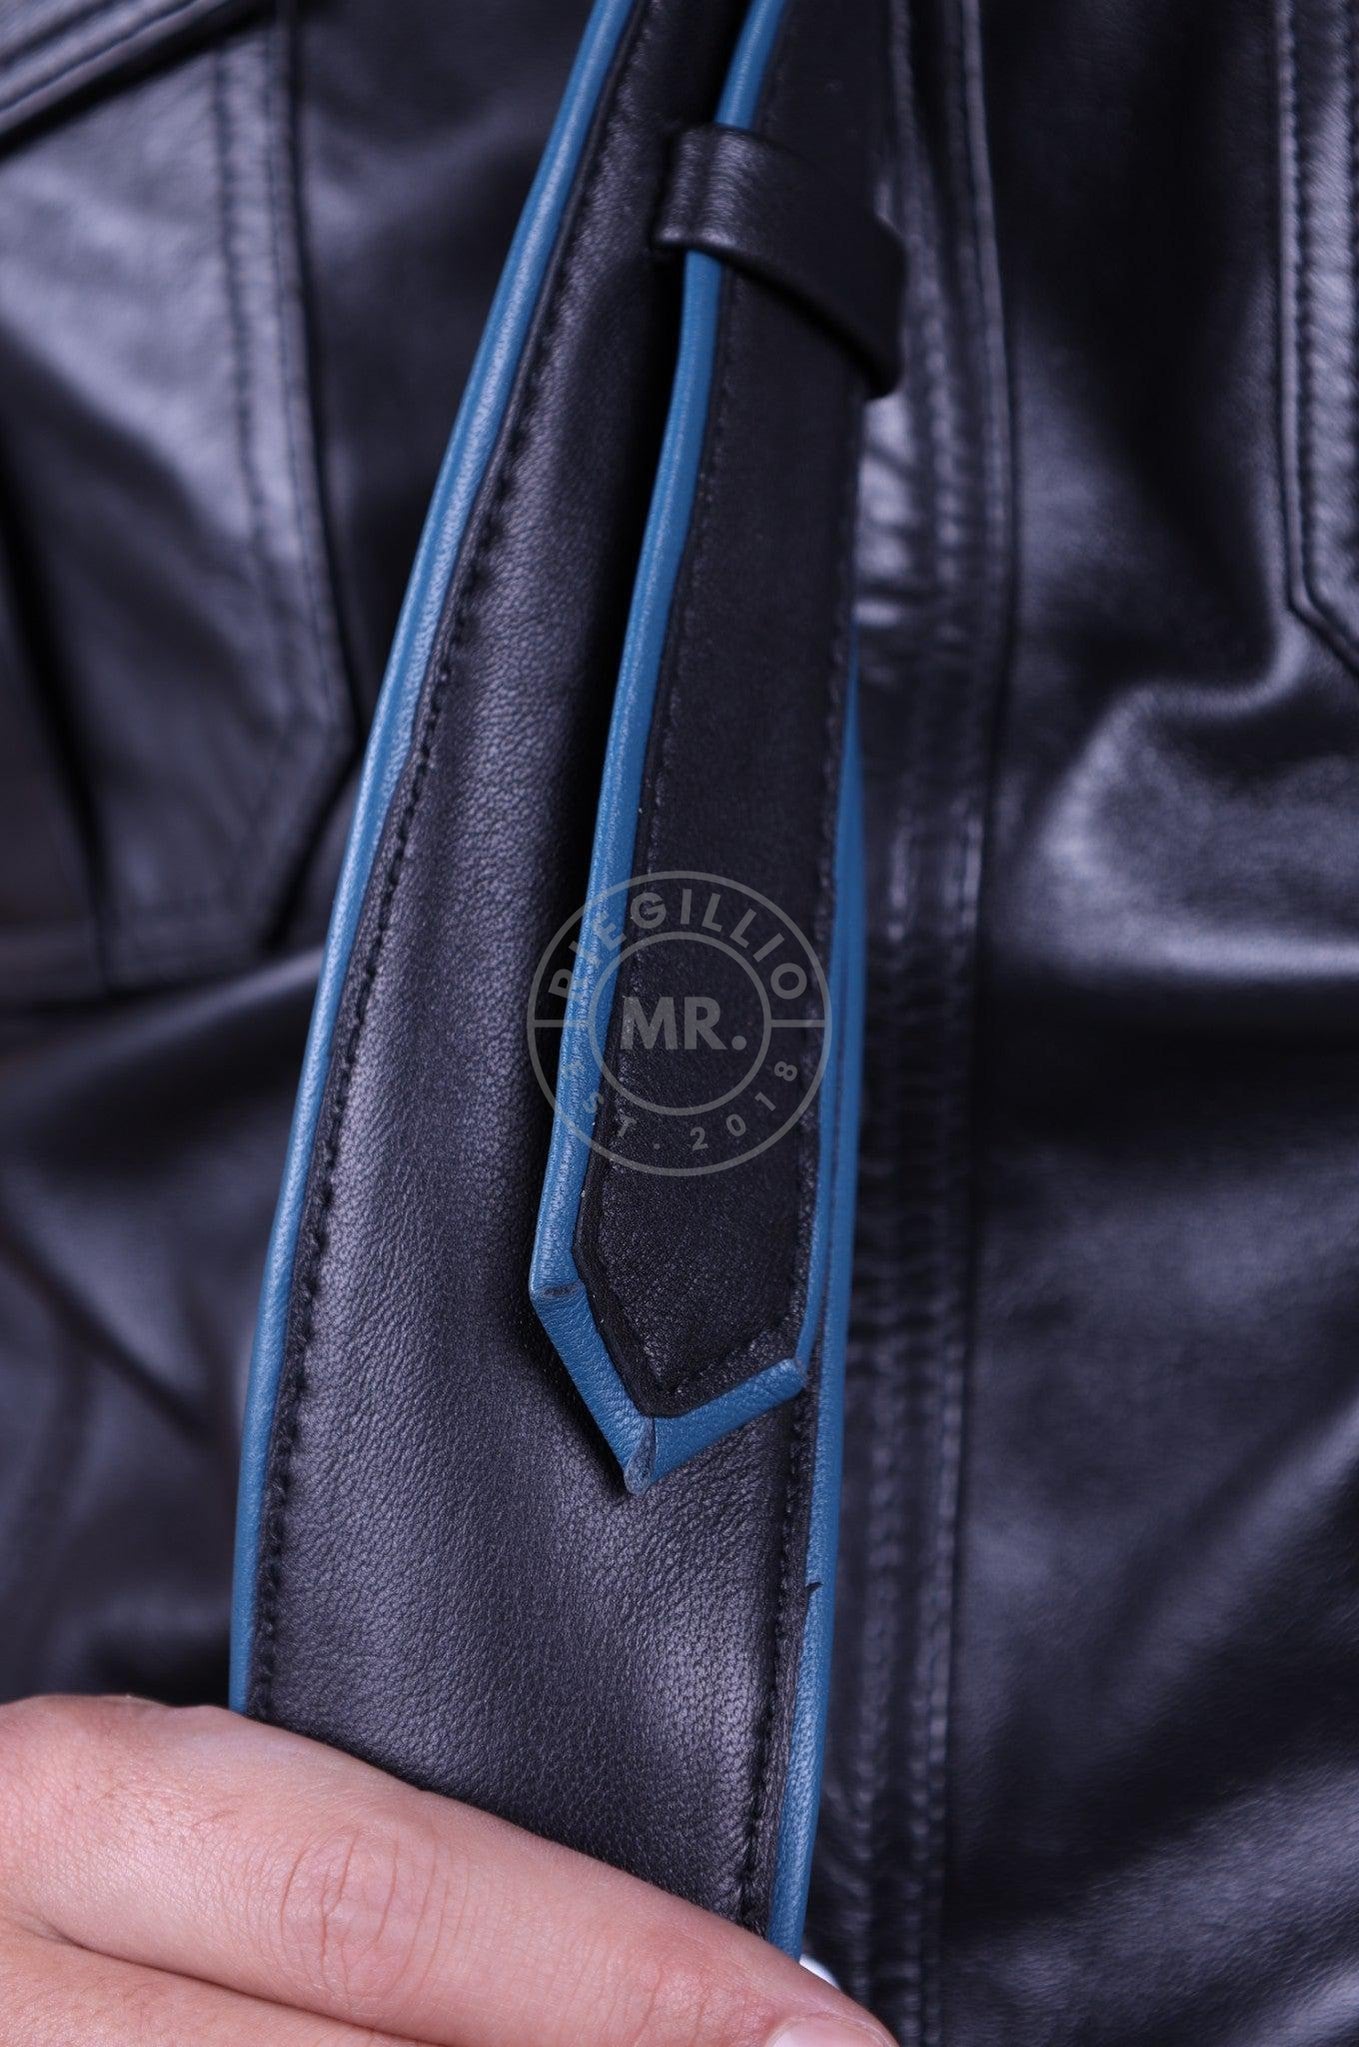 Black Leather Tie - JEANS BLUE Piping at MR. Riegillio